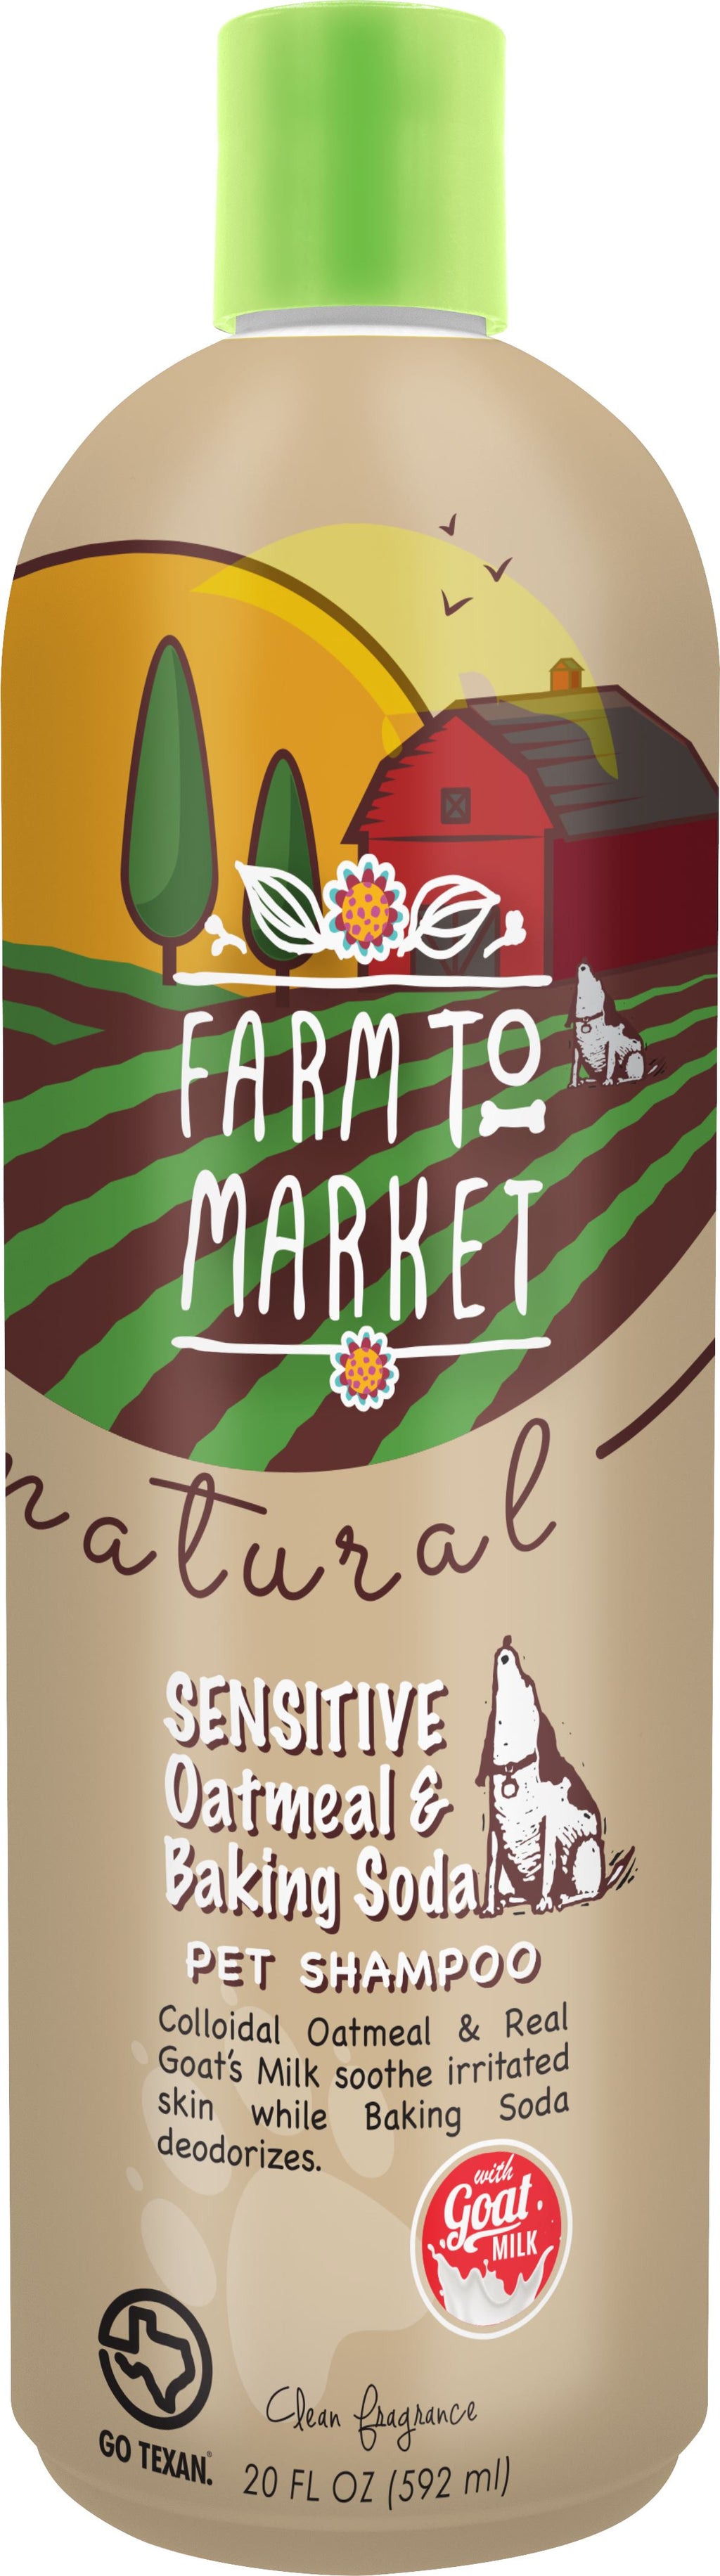 Farm to Market Natural Sensitive Oatmeal & Baking Soda Shampoo w/ Goat Milk - 20 Oz  